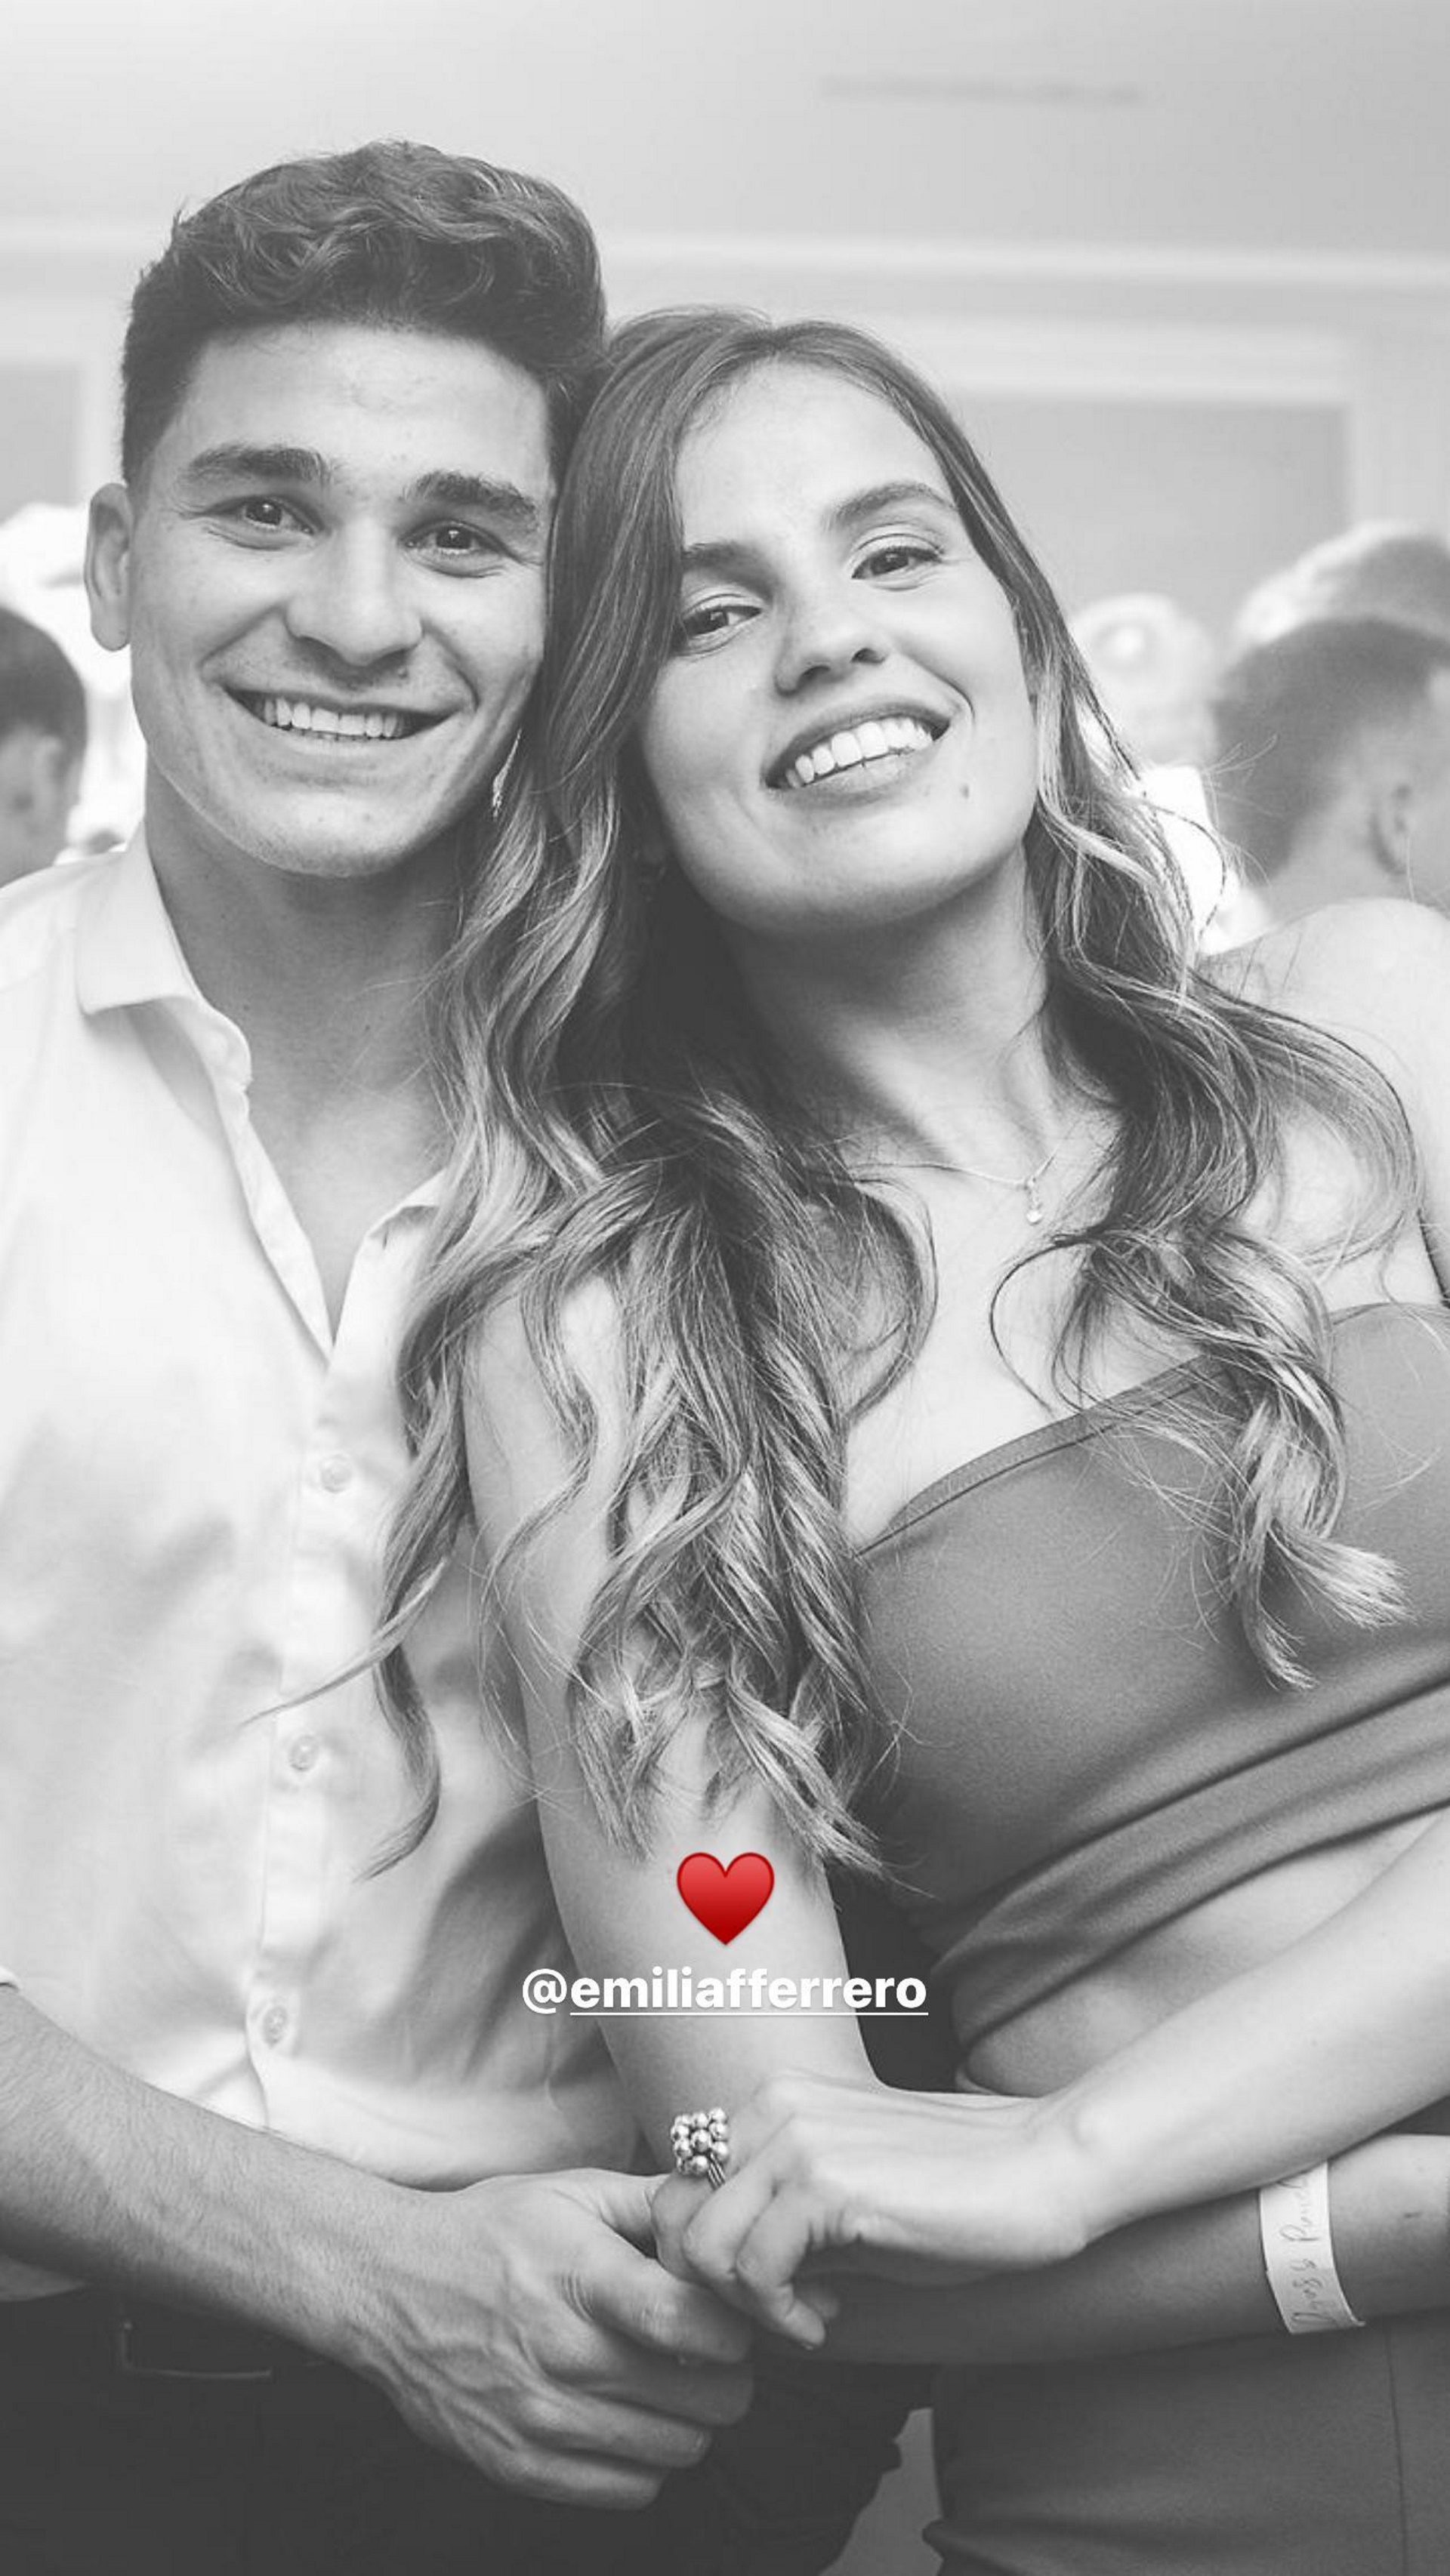 La foto del amor: el posteo de Julián Álvarez con Emilia Ferrero, su pareja  - Infobae